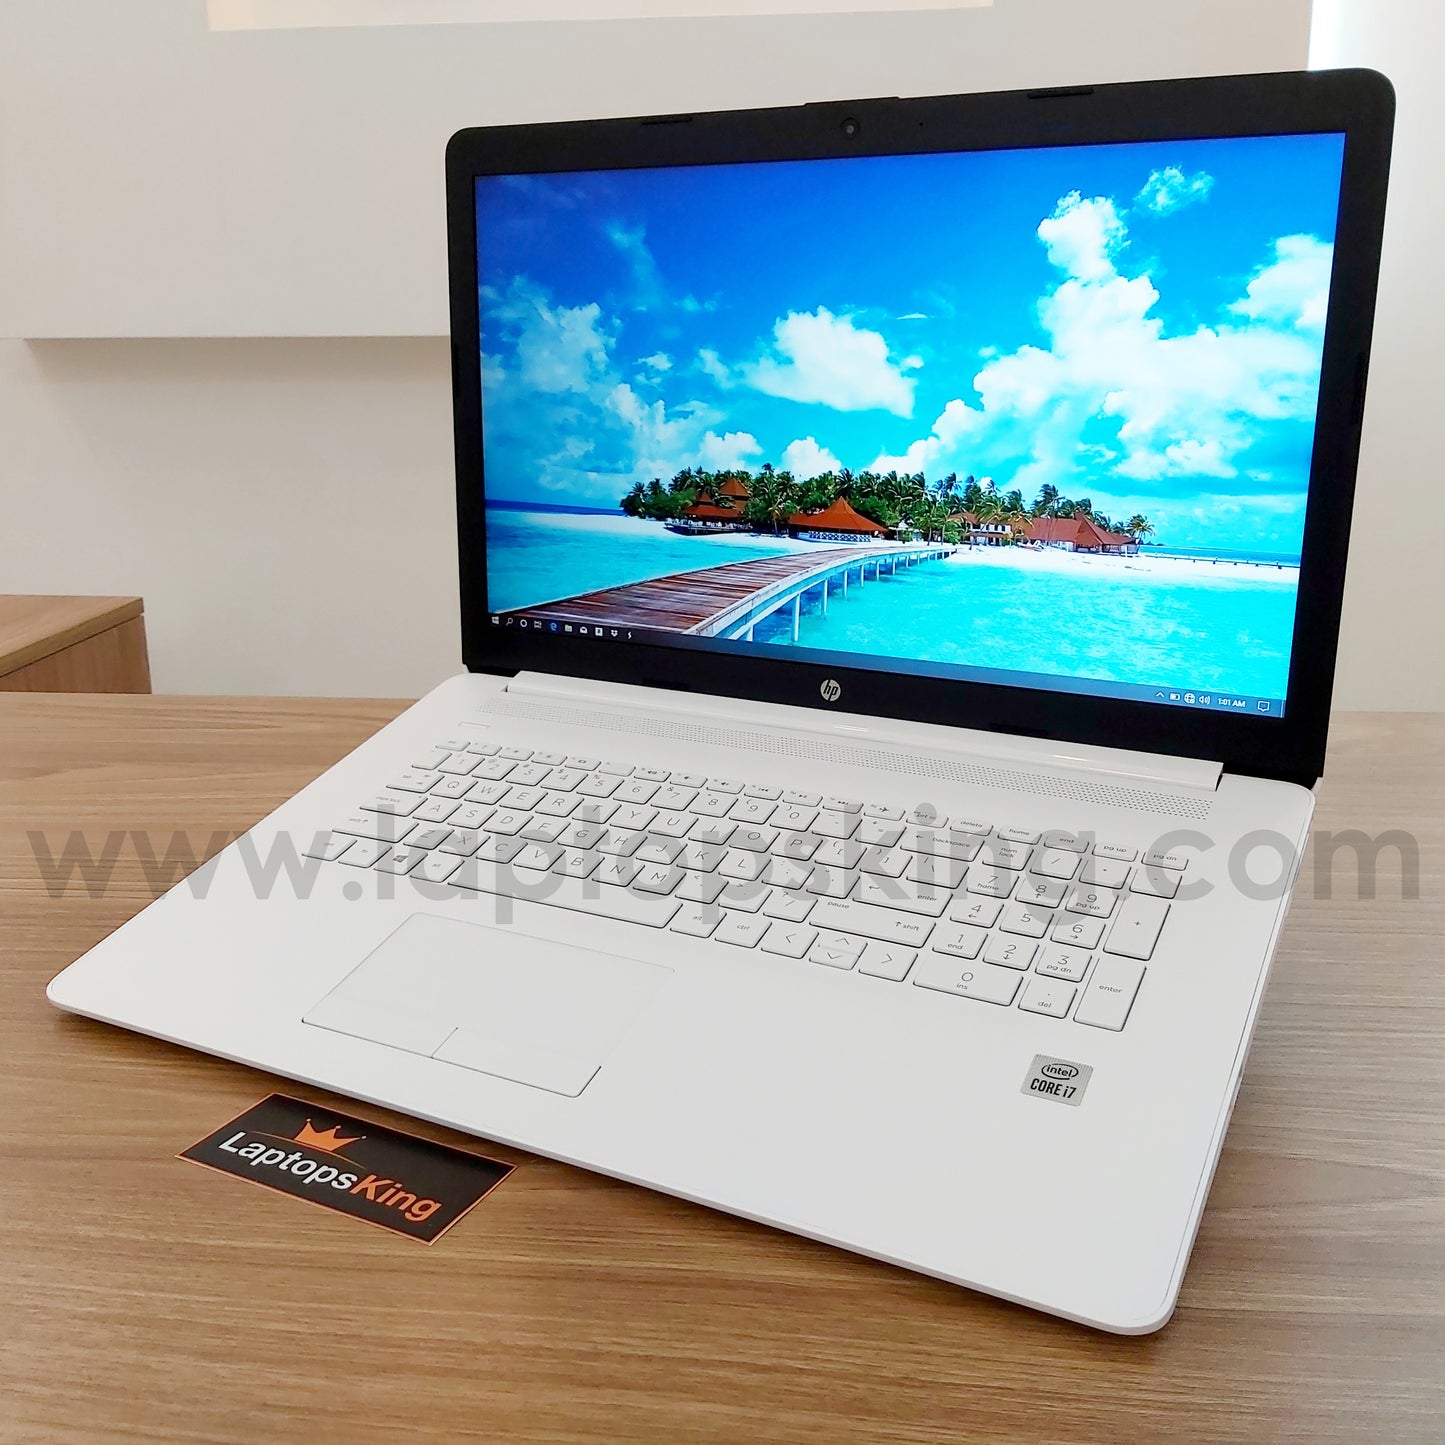 HP 17-By3 i7-1065g7 Iris Plus White Laptop (New Open Box)